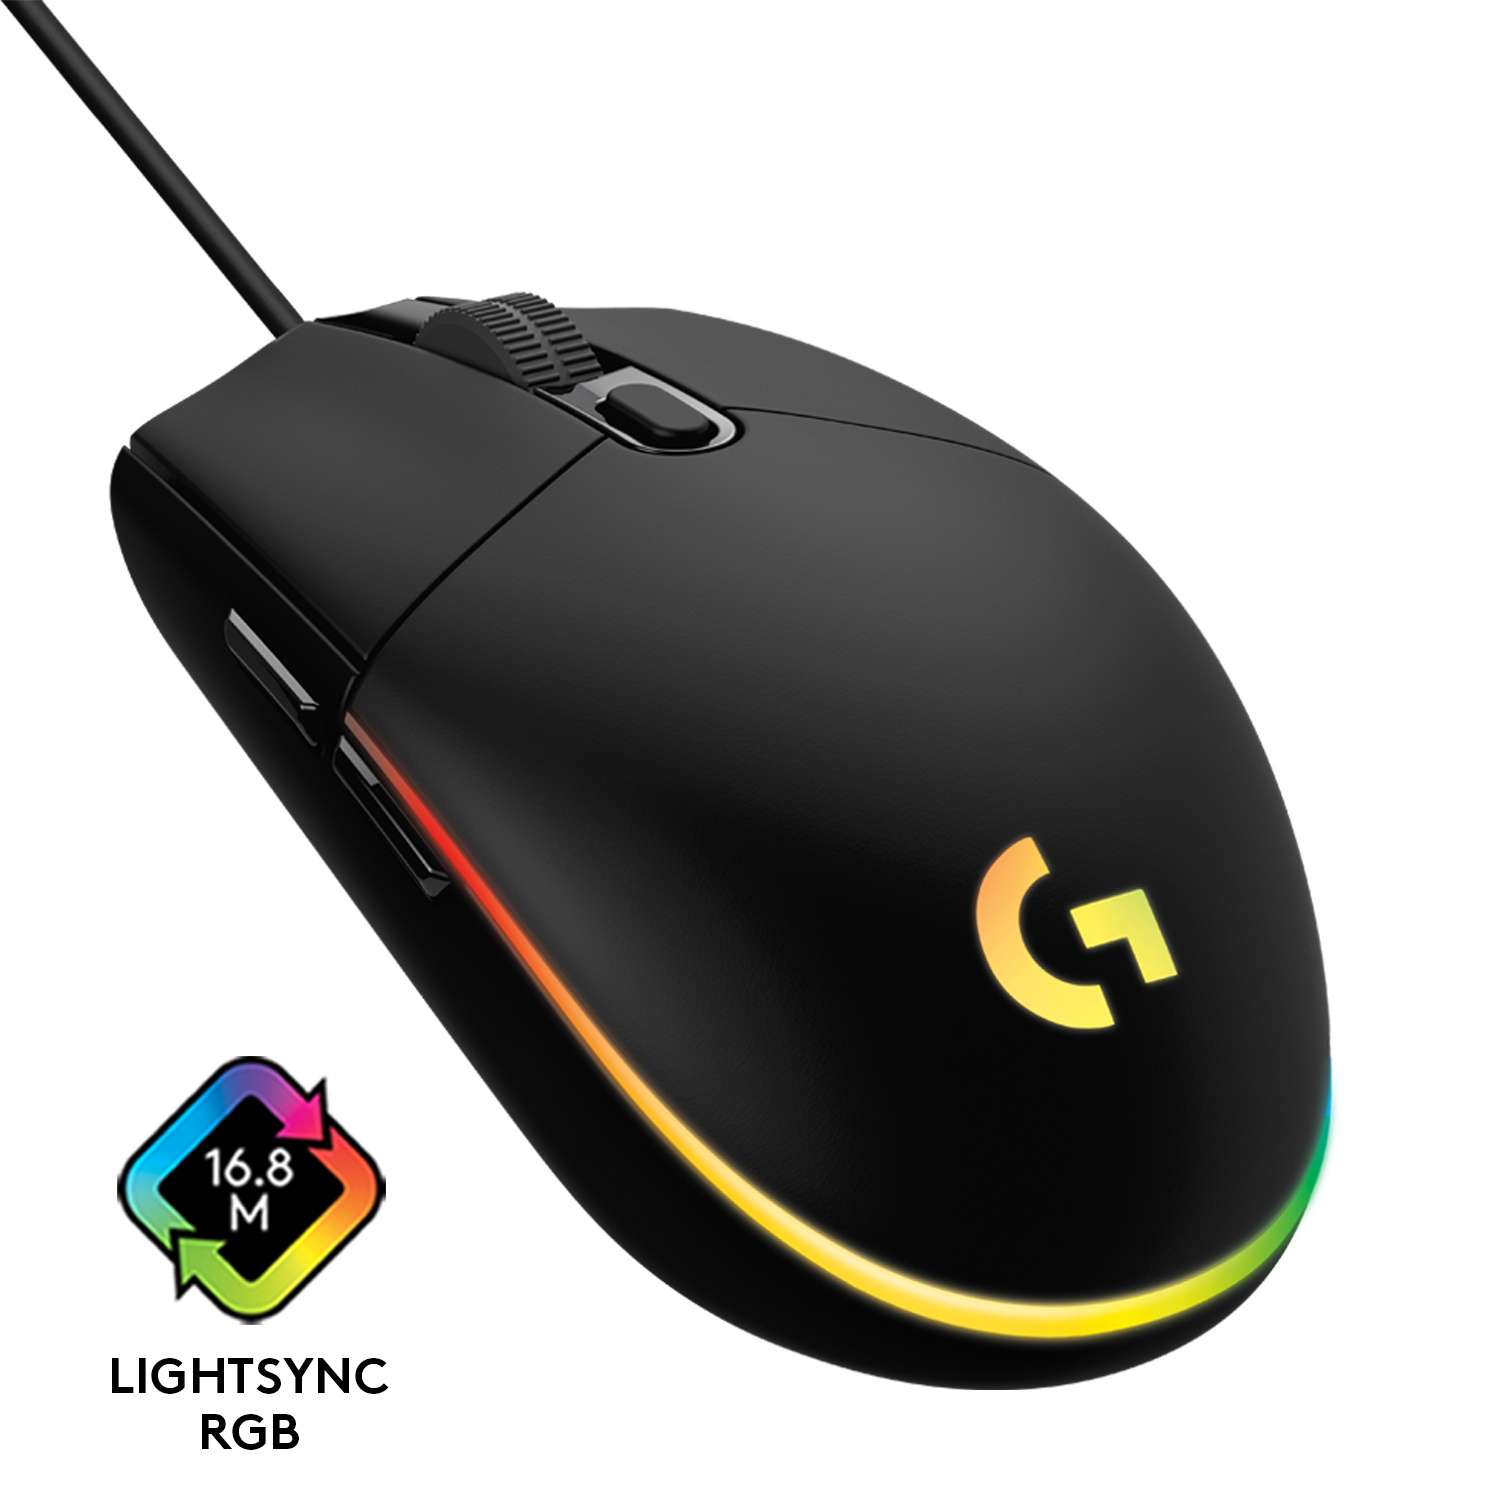 Logitech - G203 LIGHTSYNC Gaming Mouse Black